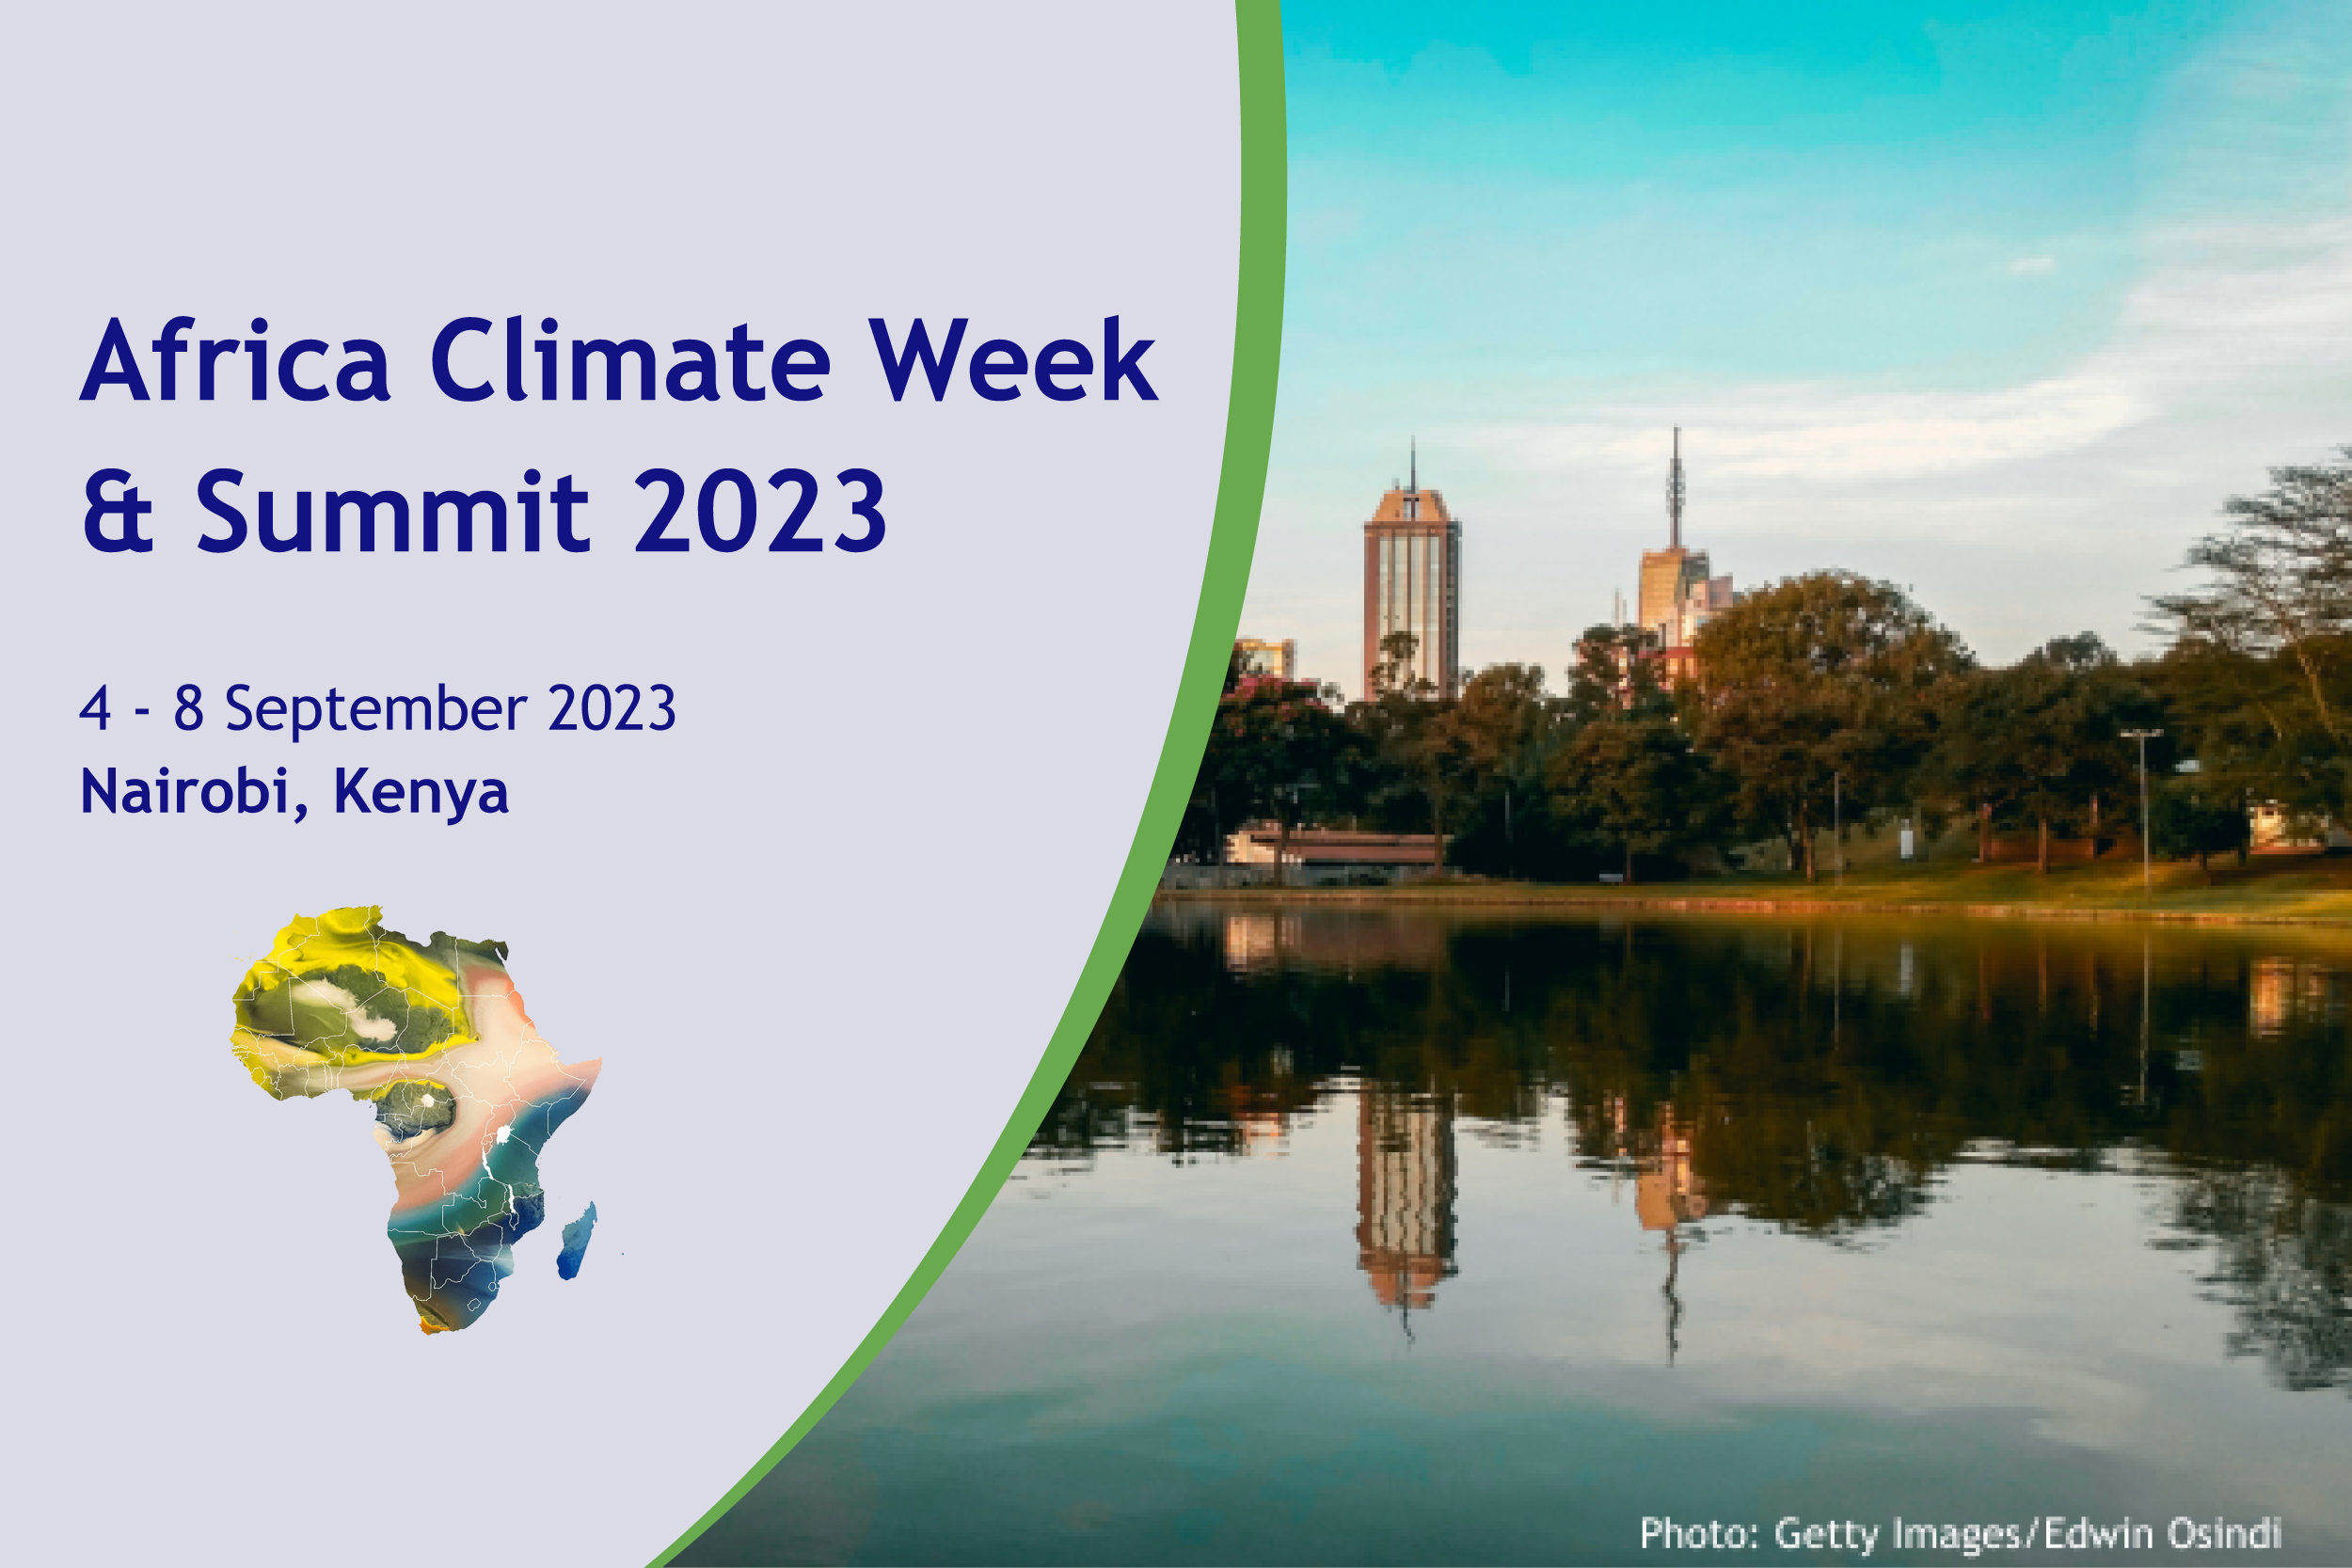 Africa Climate Week & Summit 2023